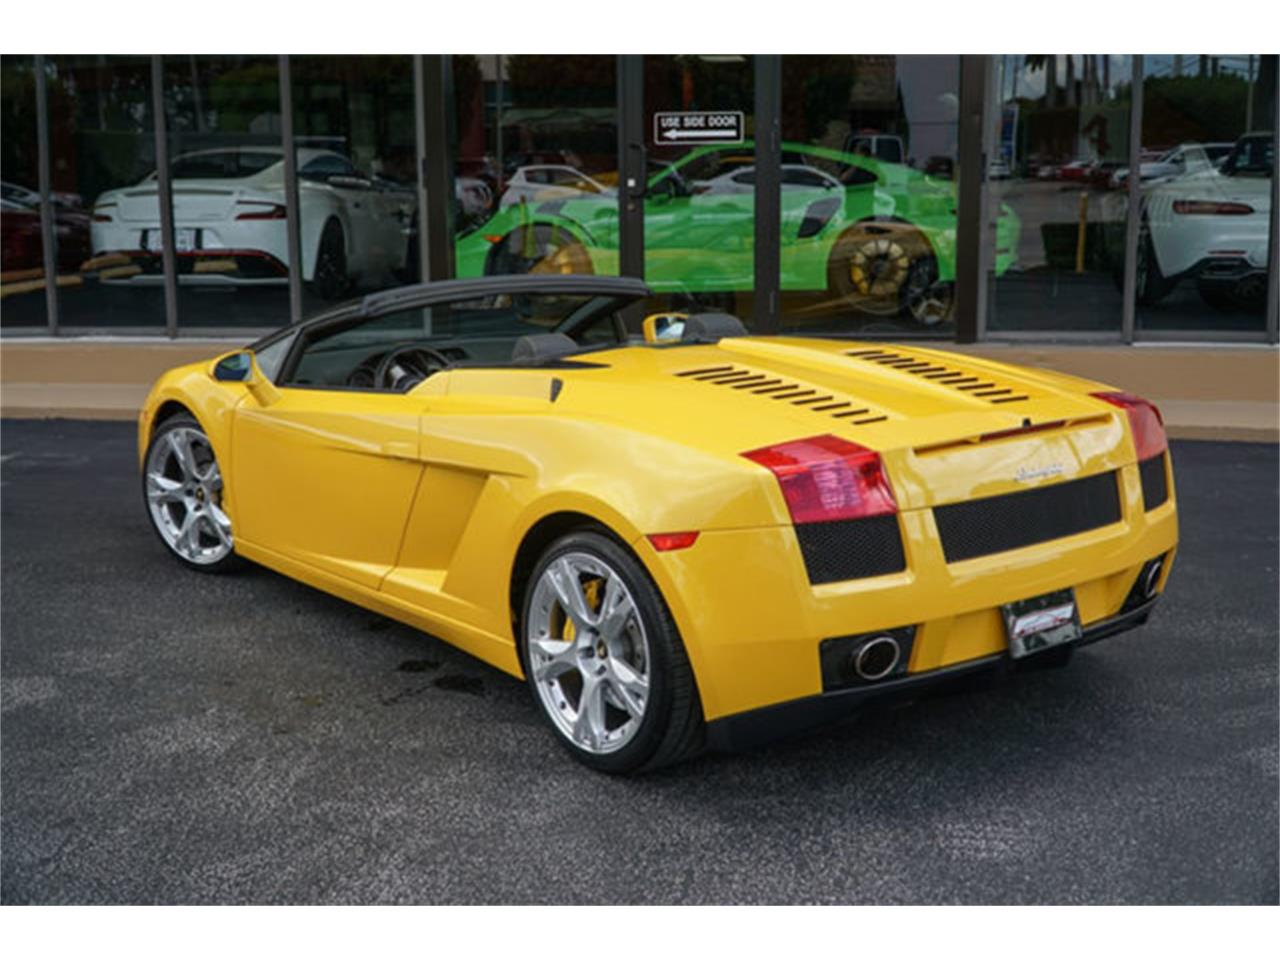 2007 Lamborghini Gallardo for Sale | ClassicCars.com | CC ...